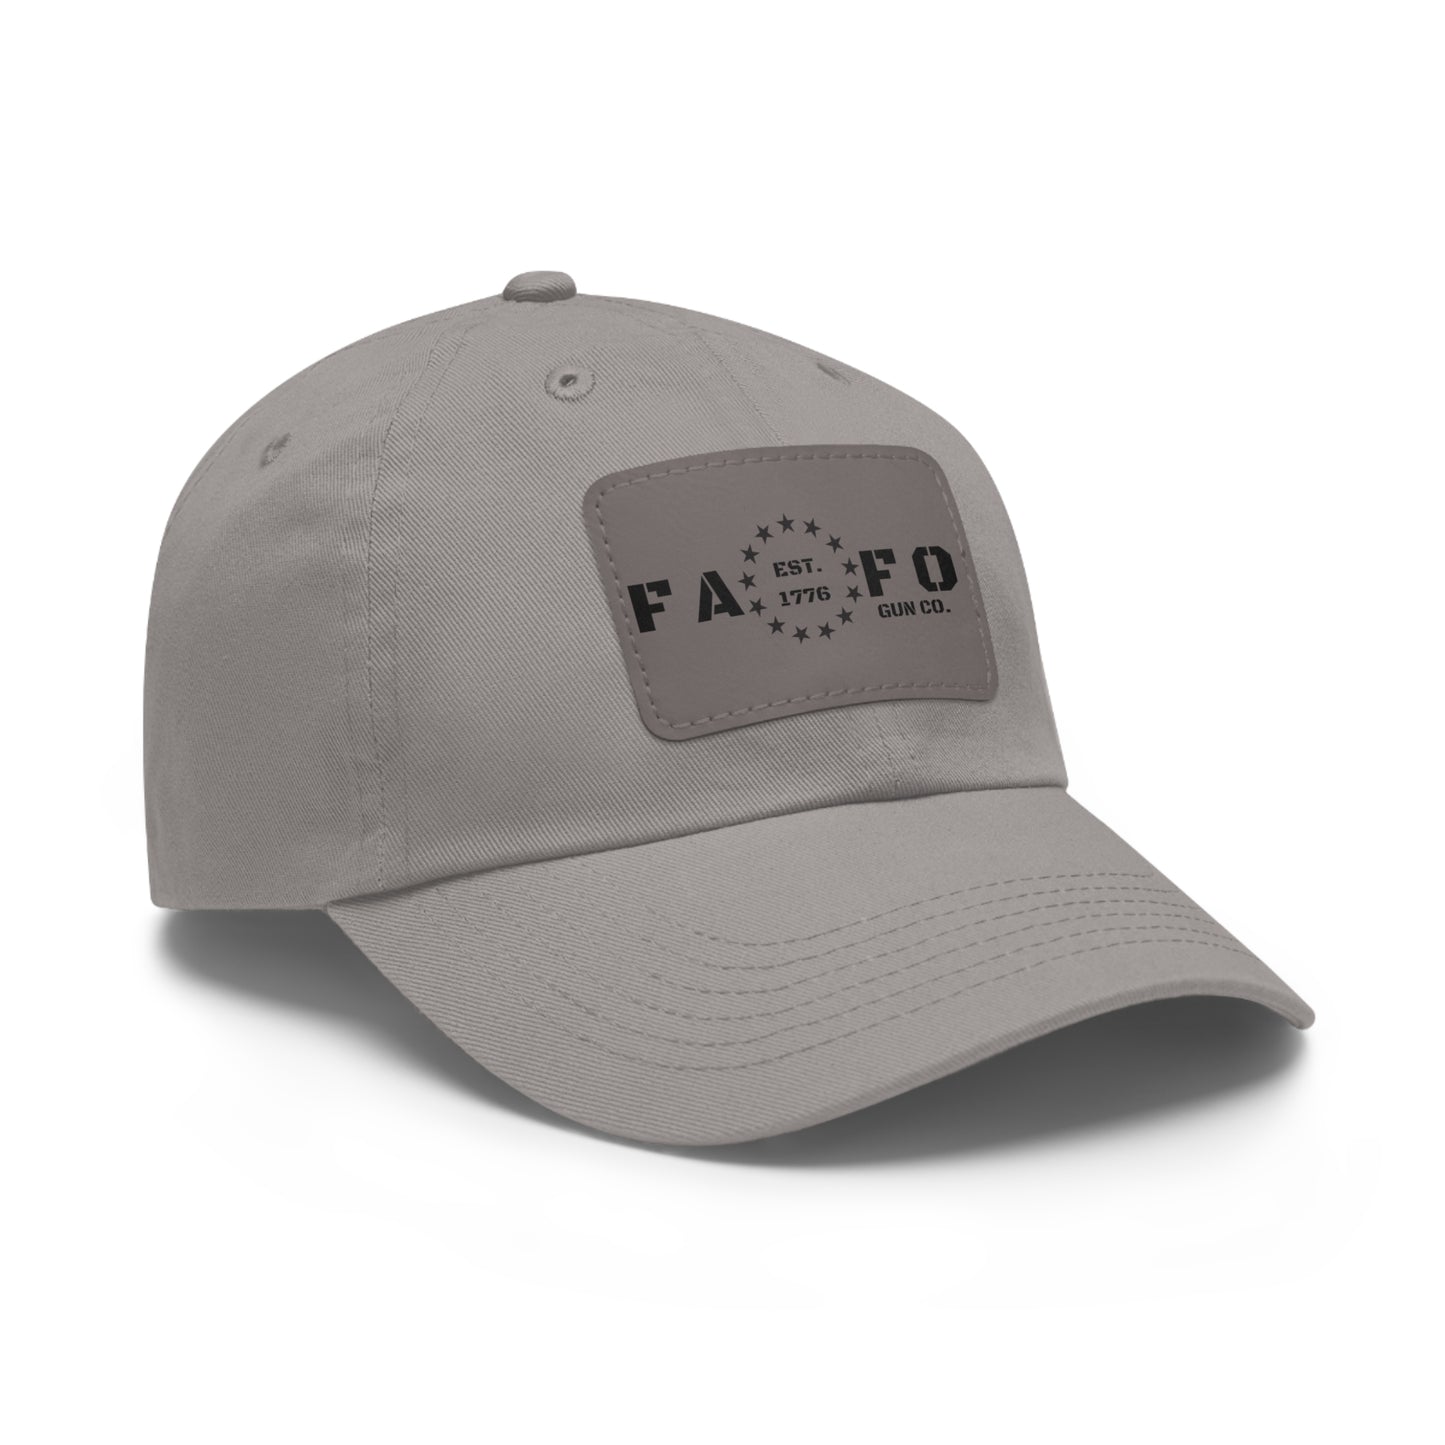 FAFO Gun Co. Logo Leather Patch Hat